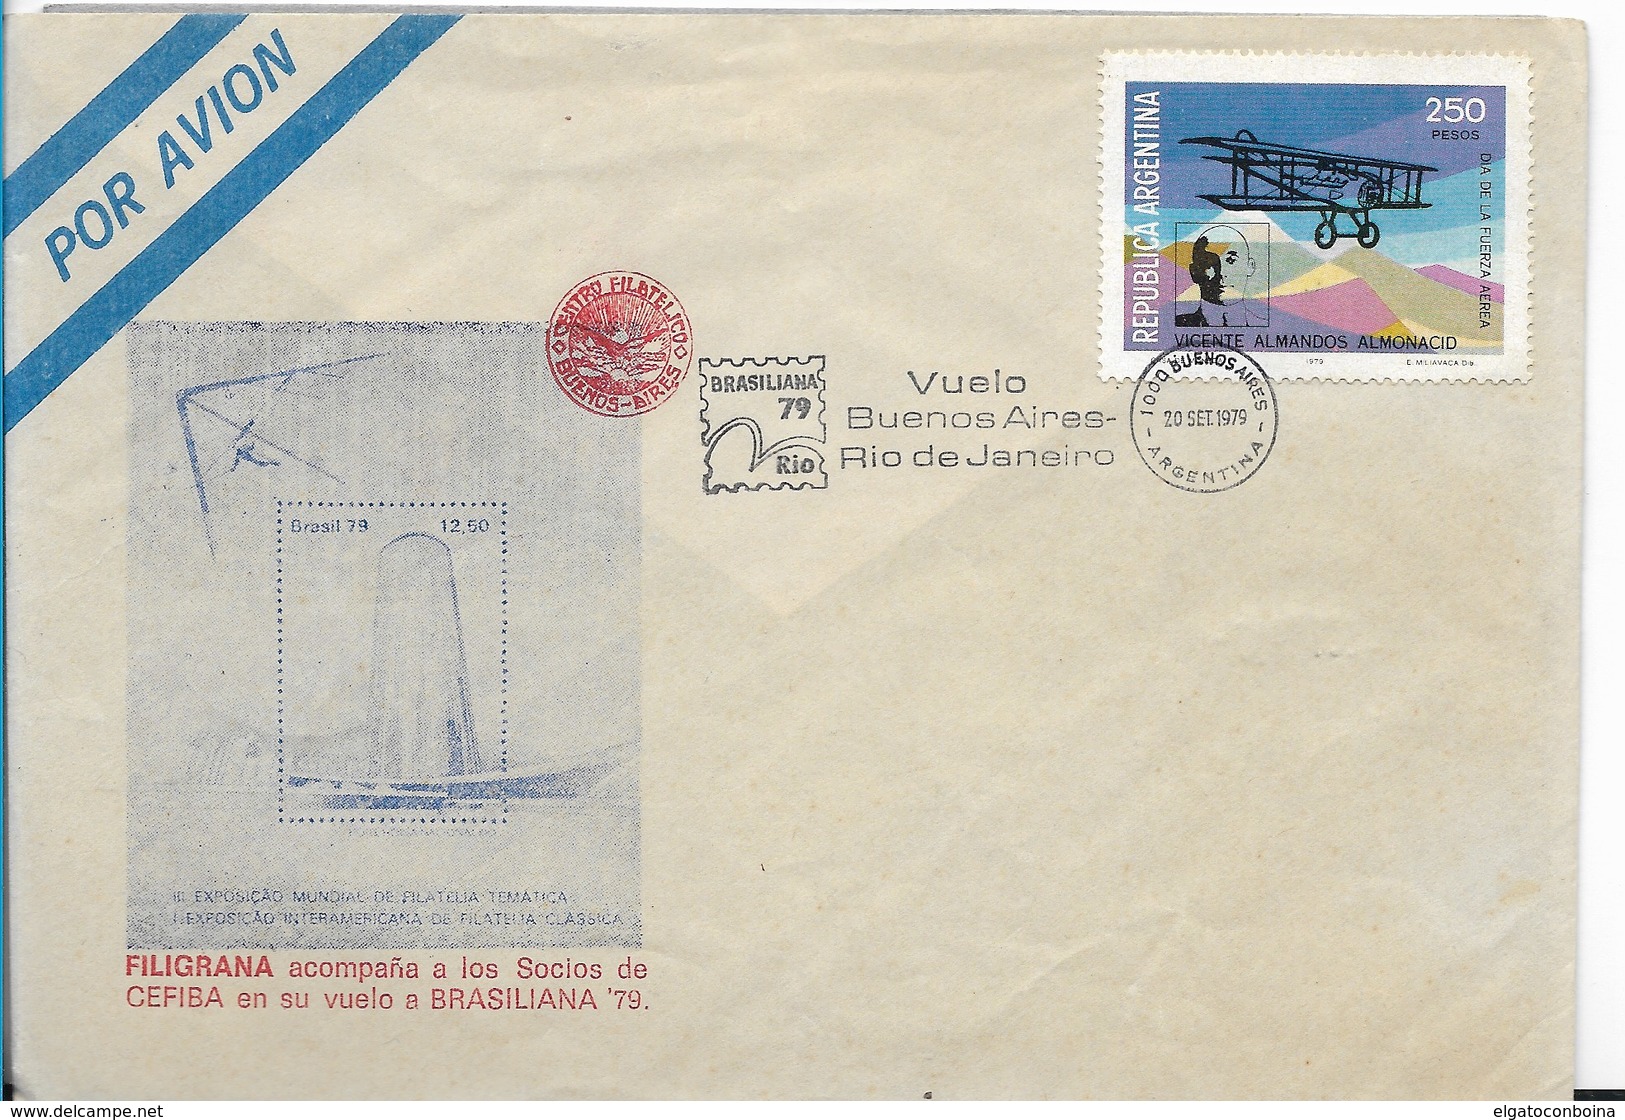 ARGENTINA 1979 COVER, BRASILIANA 79 FLIGHT BUENOS AIRES RIO DE JANEIRO PHILATELIC EXHIBITION AVIATION - FDC